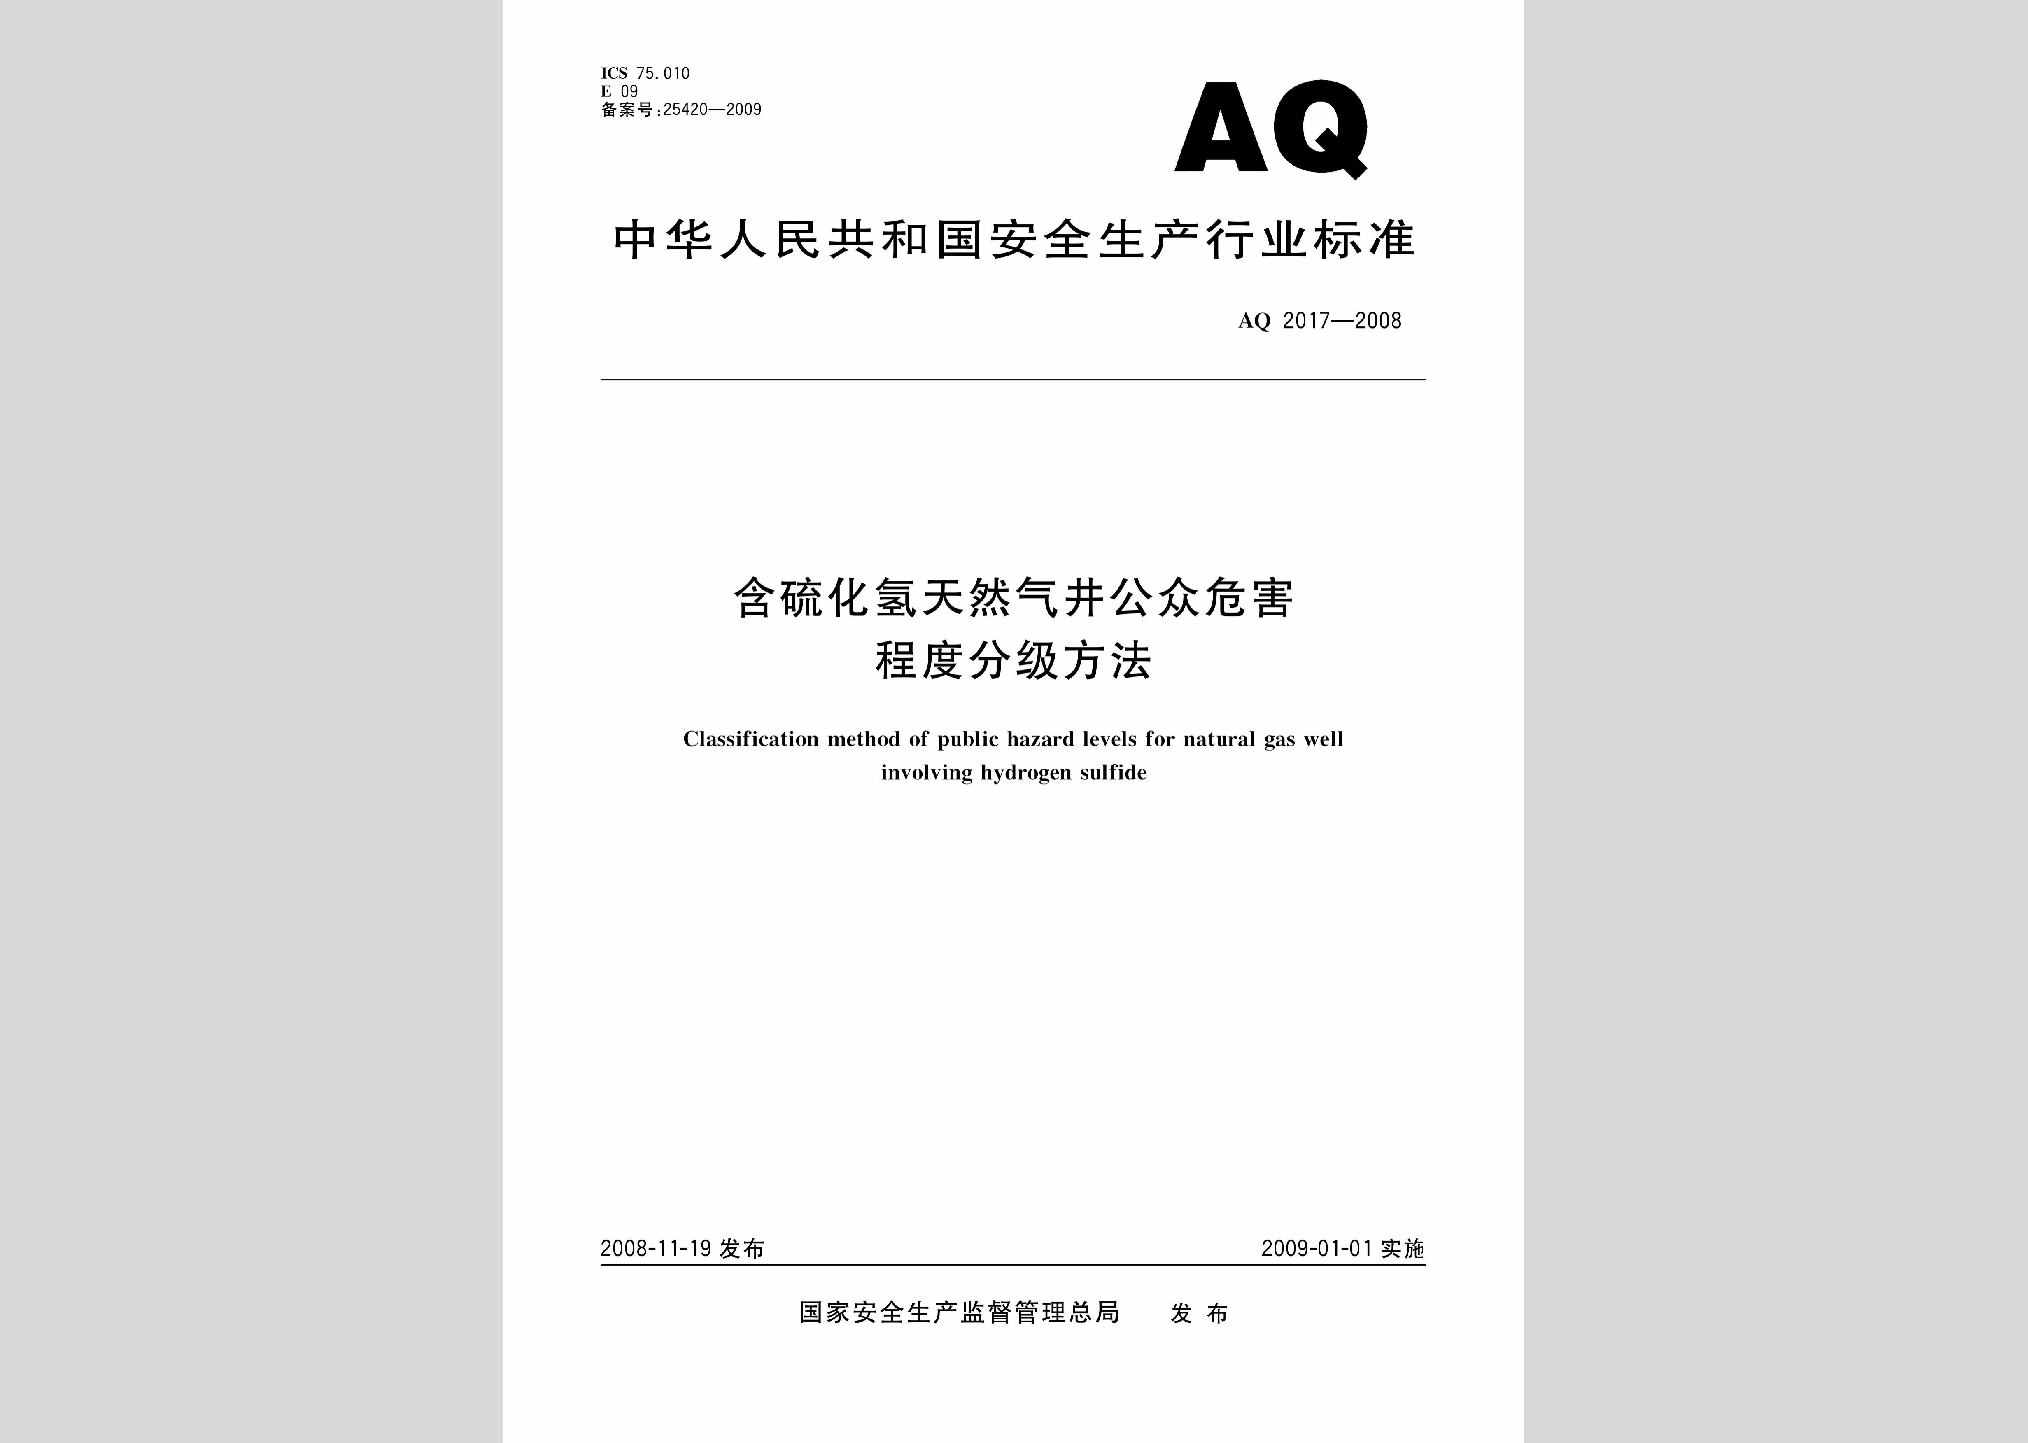 AQ2017-2008：含硫化氢天然气井公众危害程度分级方法